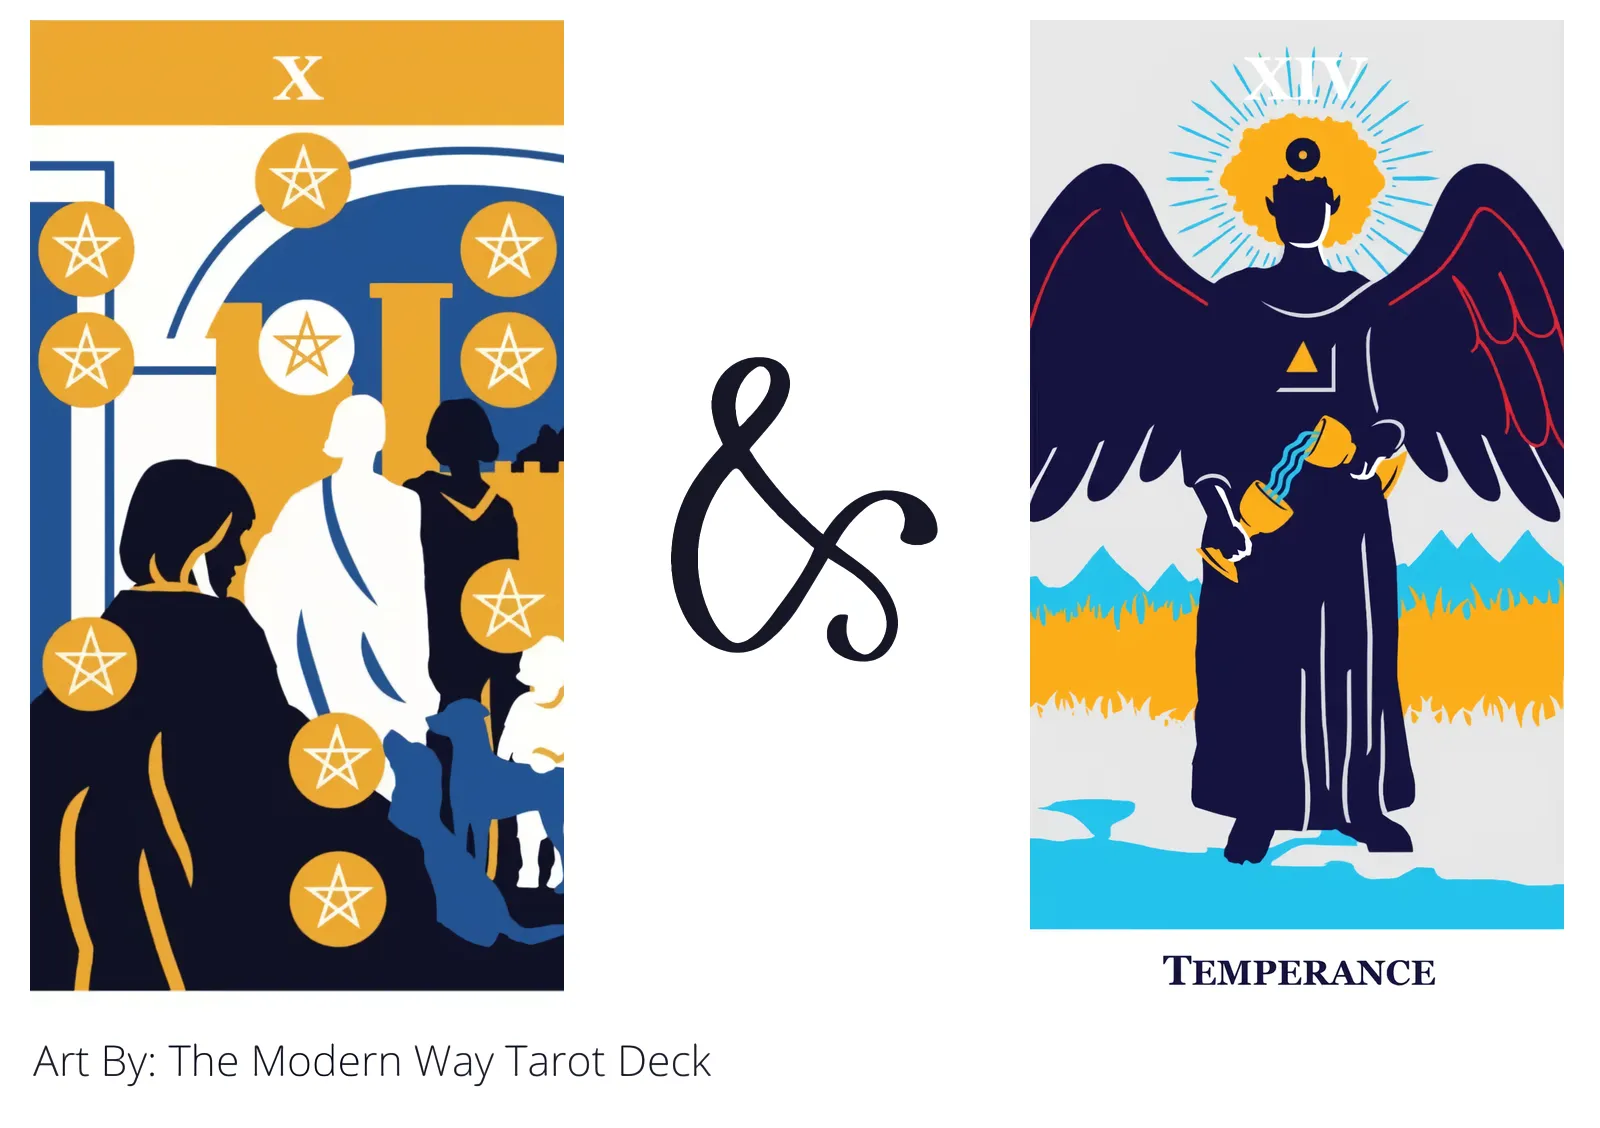 ten of pentacles and temperance tarot cards together